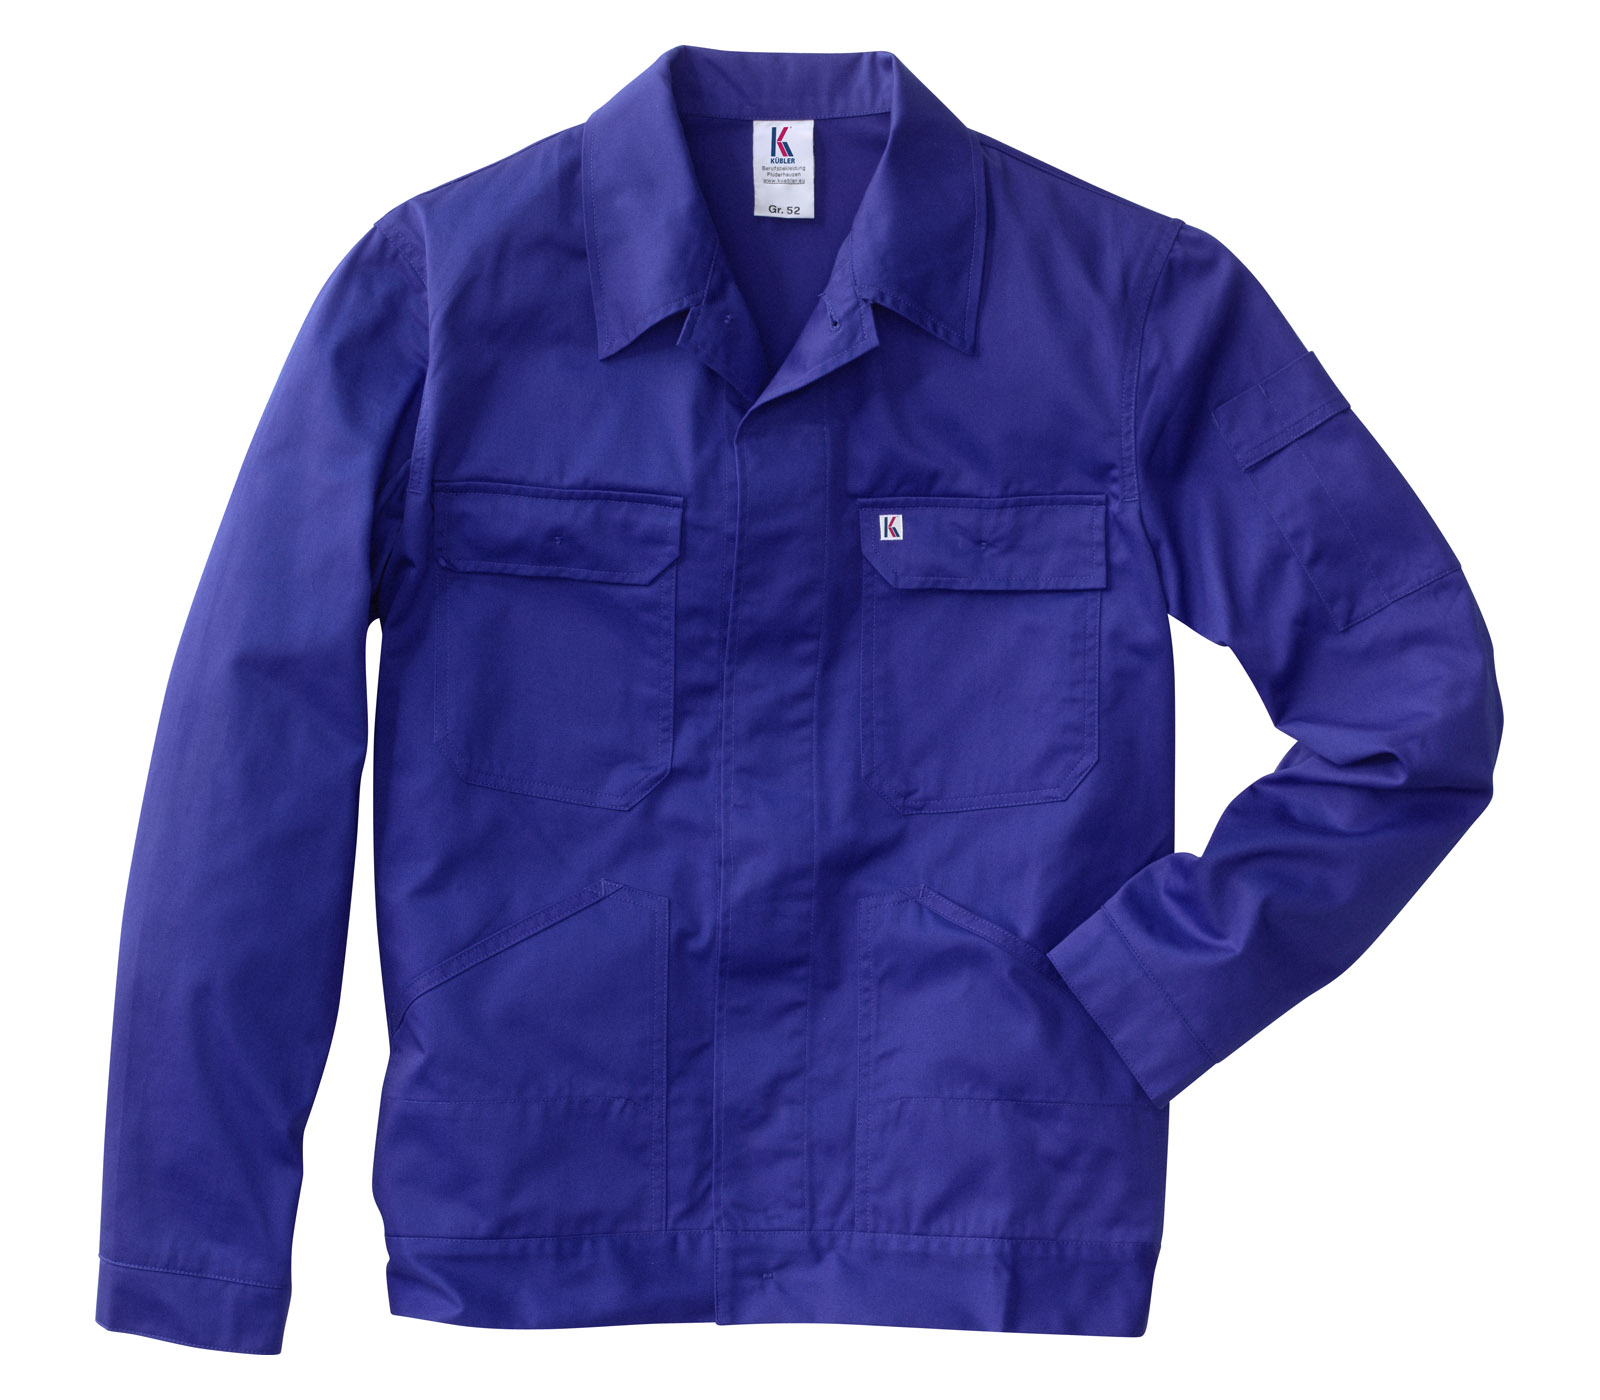 KÜBLER ECO Plus Dress Bundjacke Arbeitsjacke Berufsjacke Schutzjacke Arbeitskleidung Berufskleidung kornblau